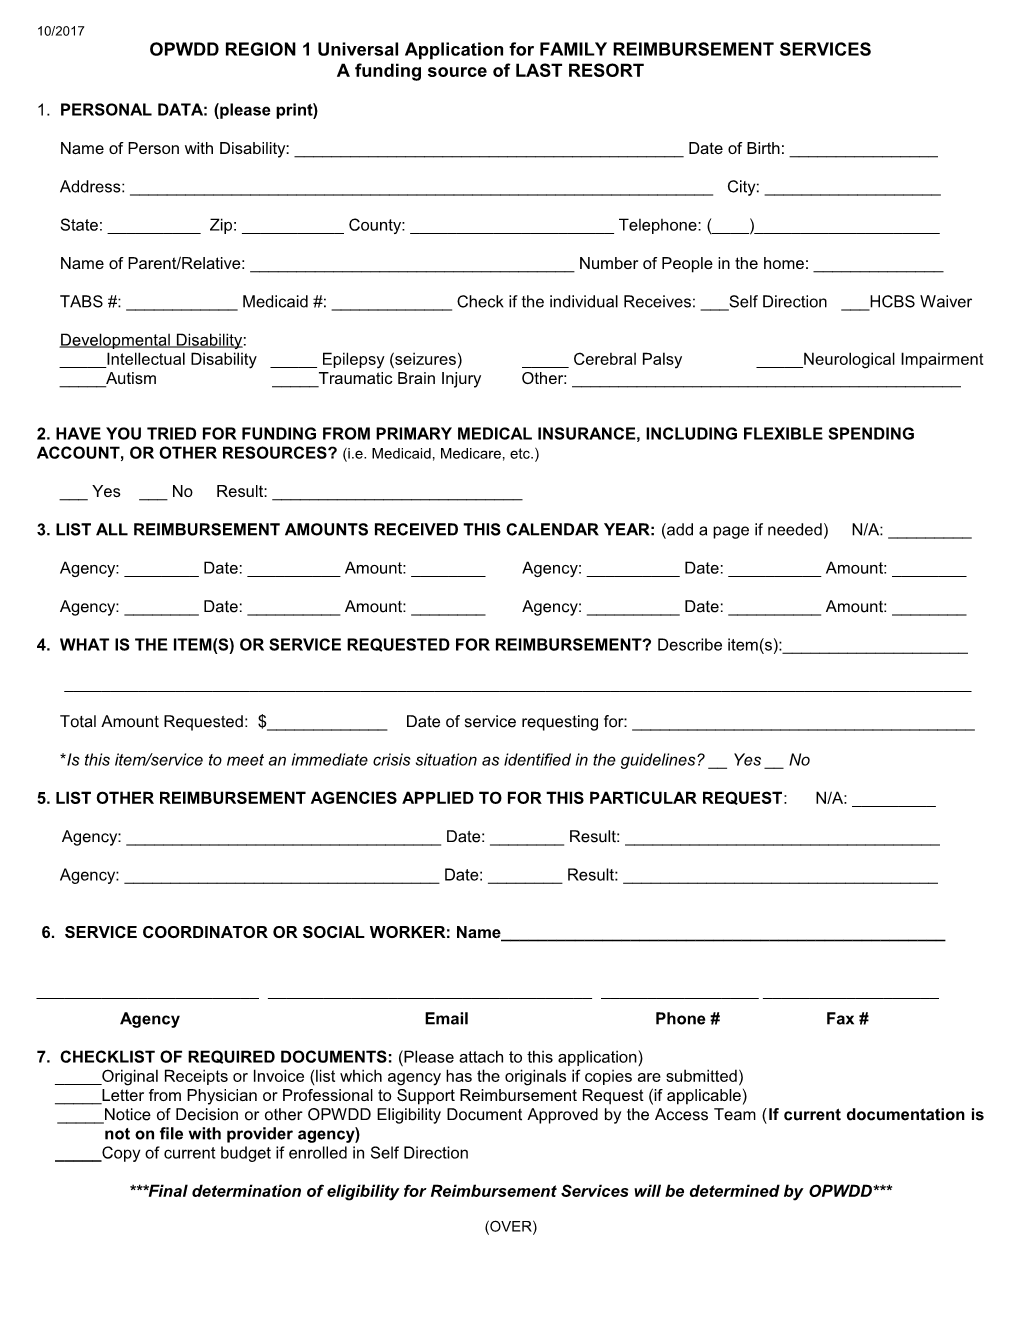 Application for the Health Association FAMILY REIMBURSEMENT SERVICES